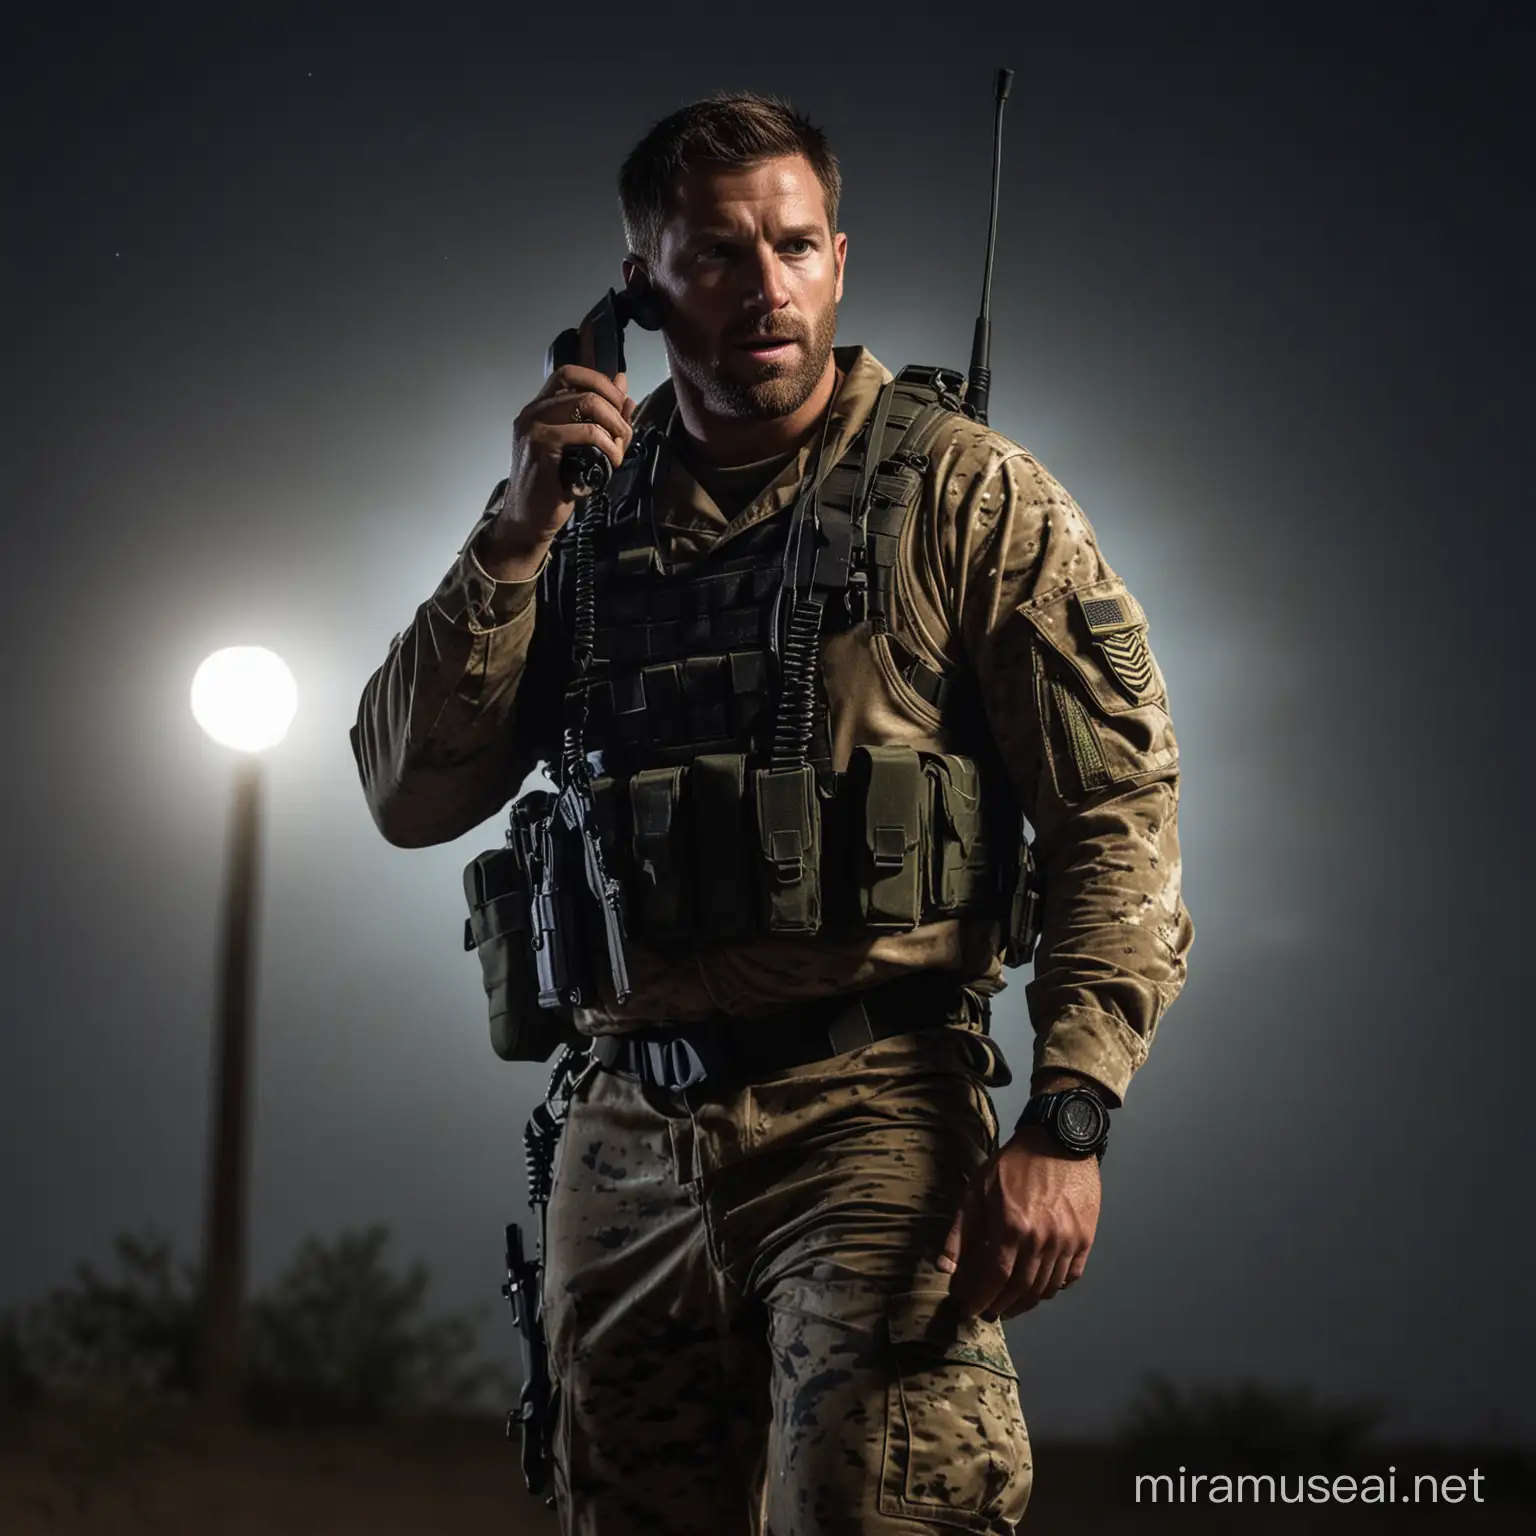 navy seal soldier talking on walkie talkie in night